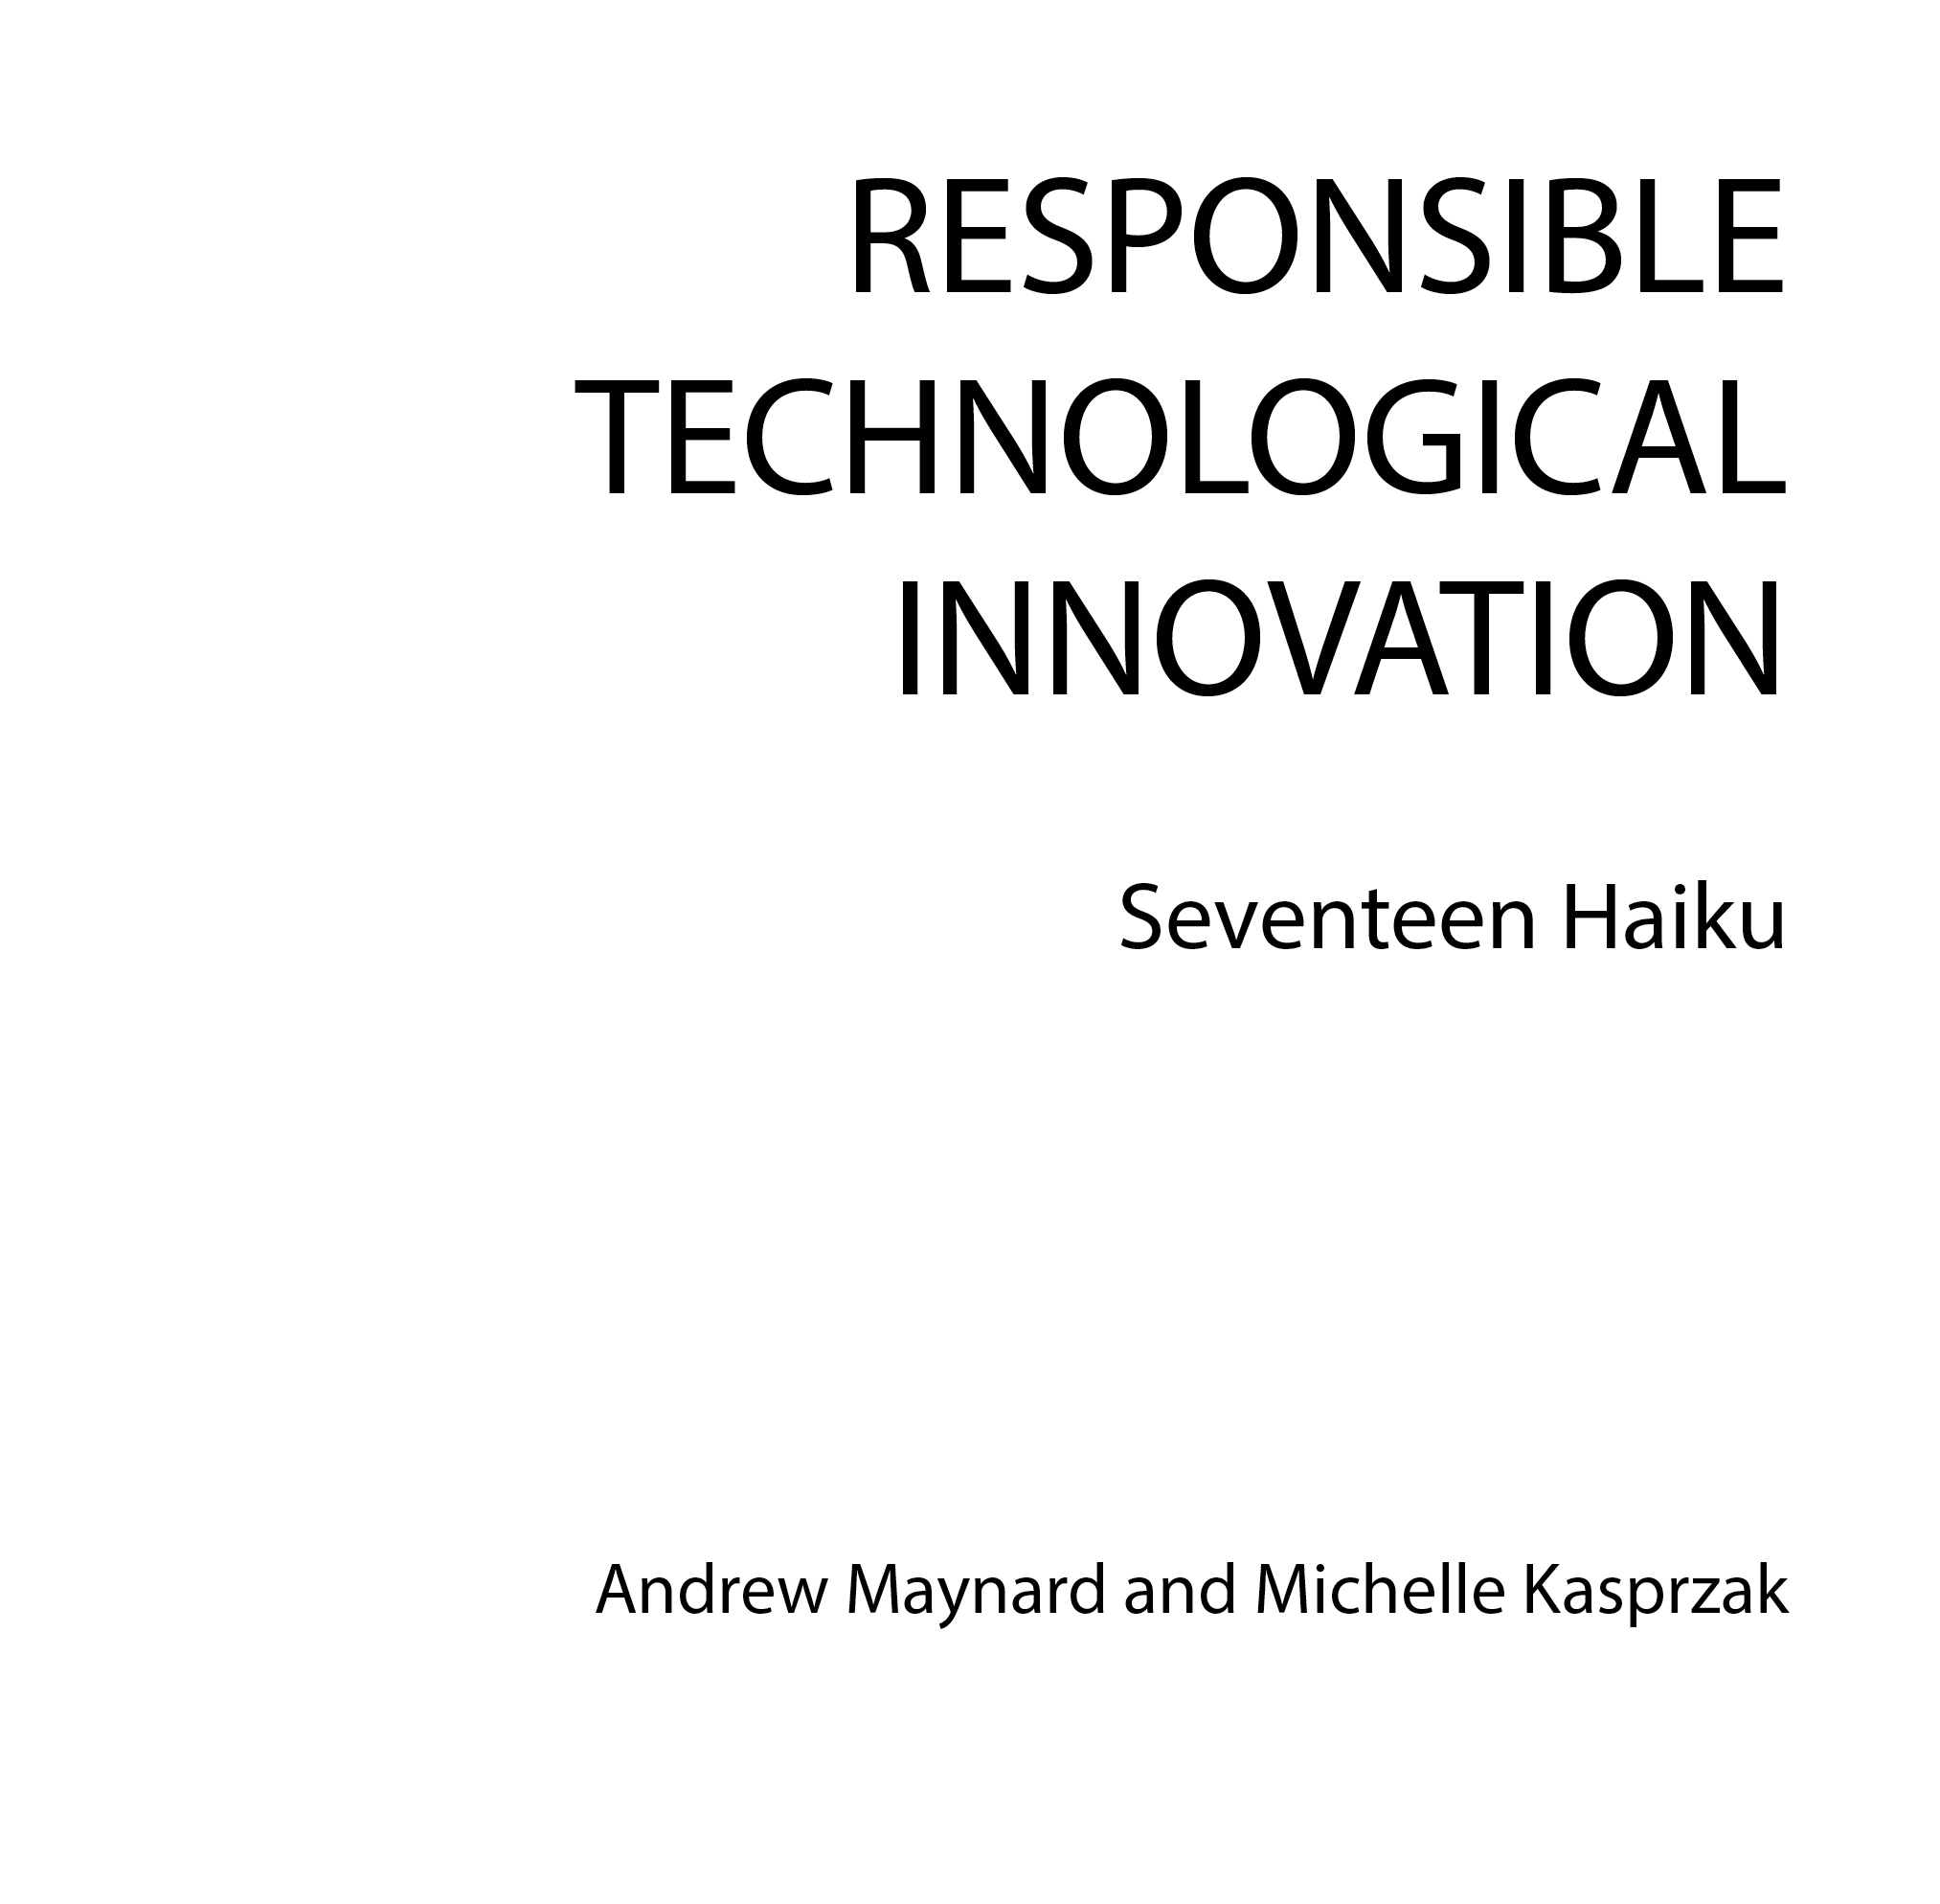 Responsible Innovation – Seventeen Haiku